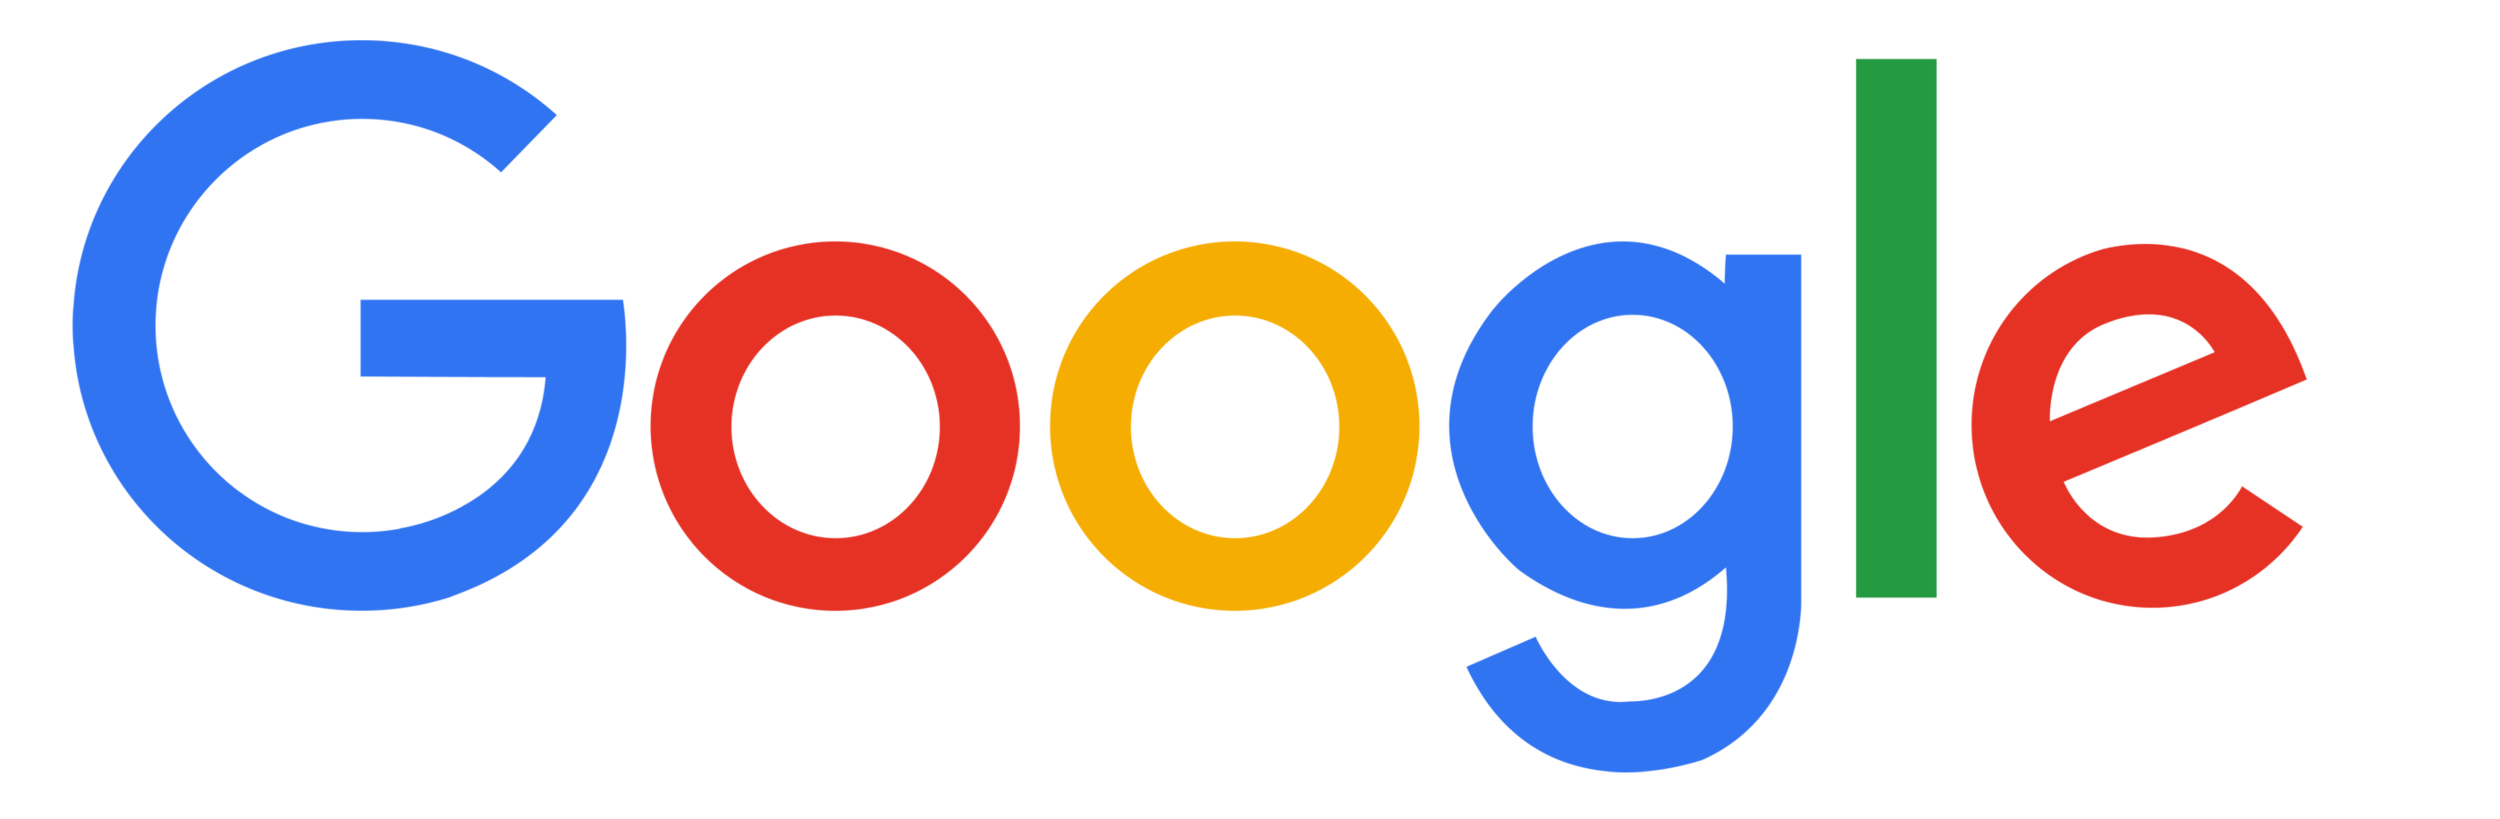 new-google-logo-png.png